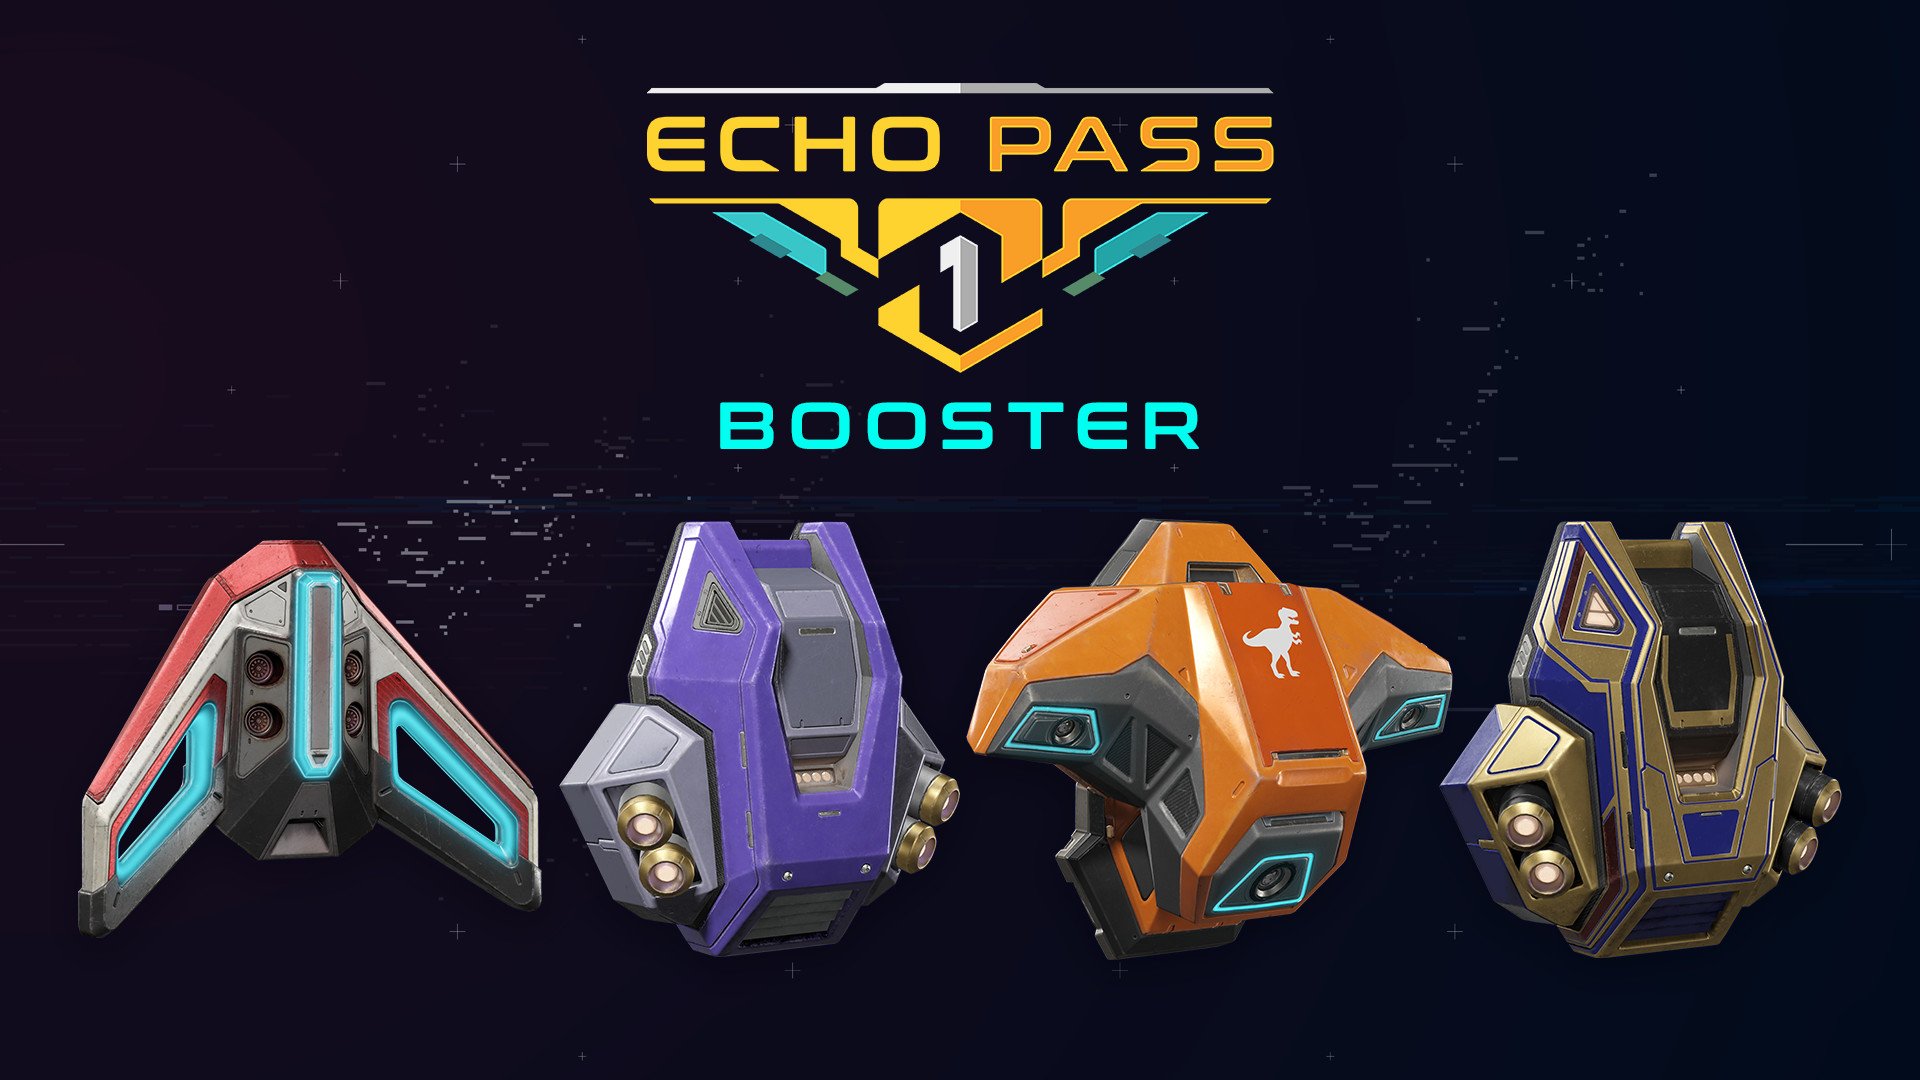 Echo Vr Echo Pass Season 1 Boosters